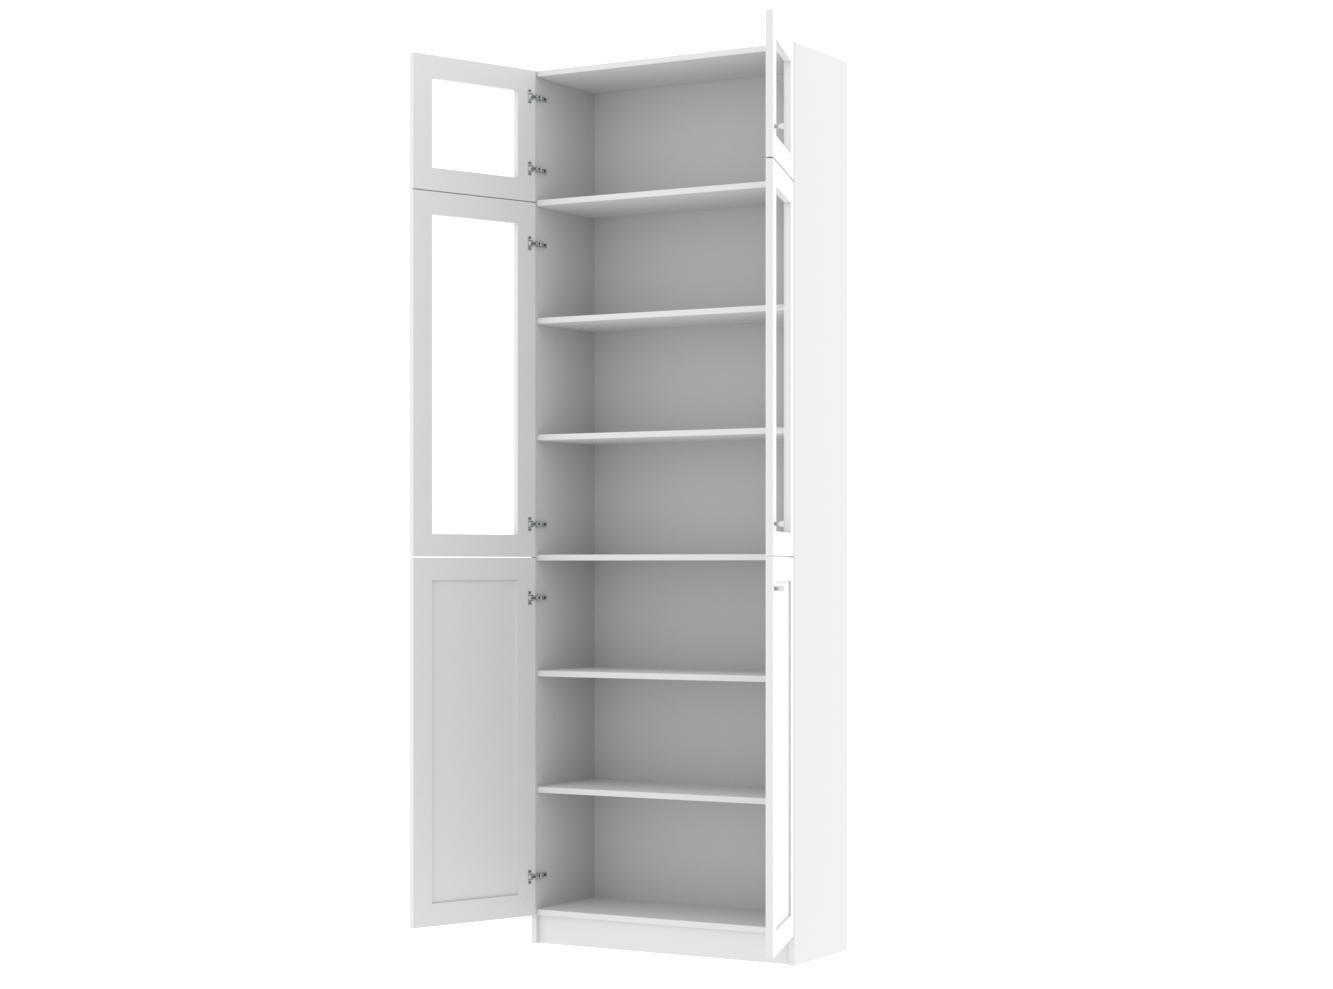  Книжный шкаф Билли 36 white ИКЕА (IKEA) изображение товара